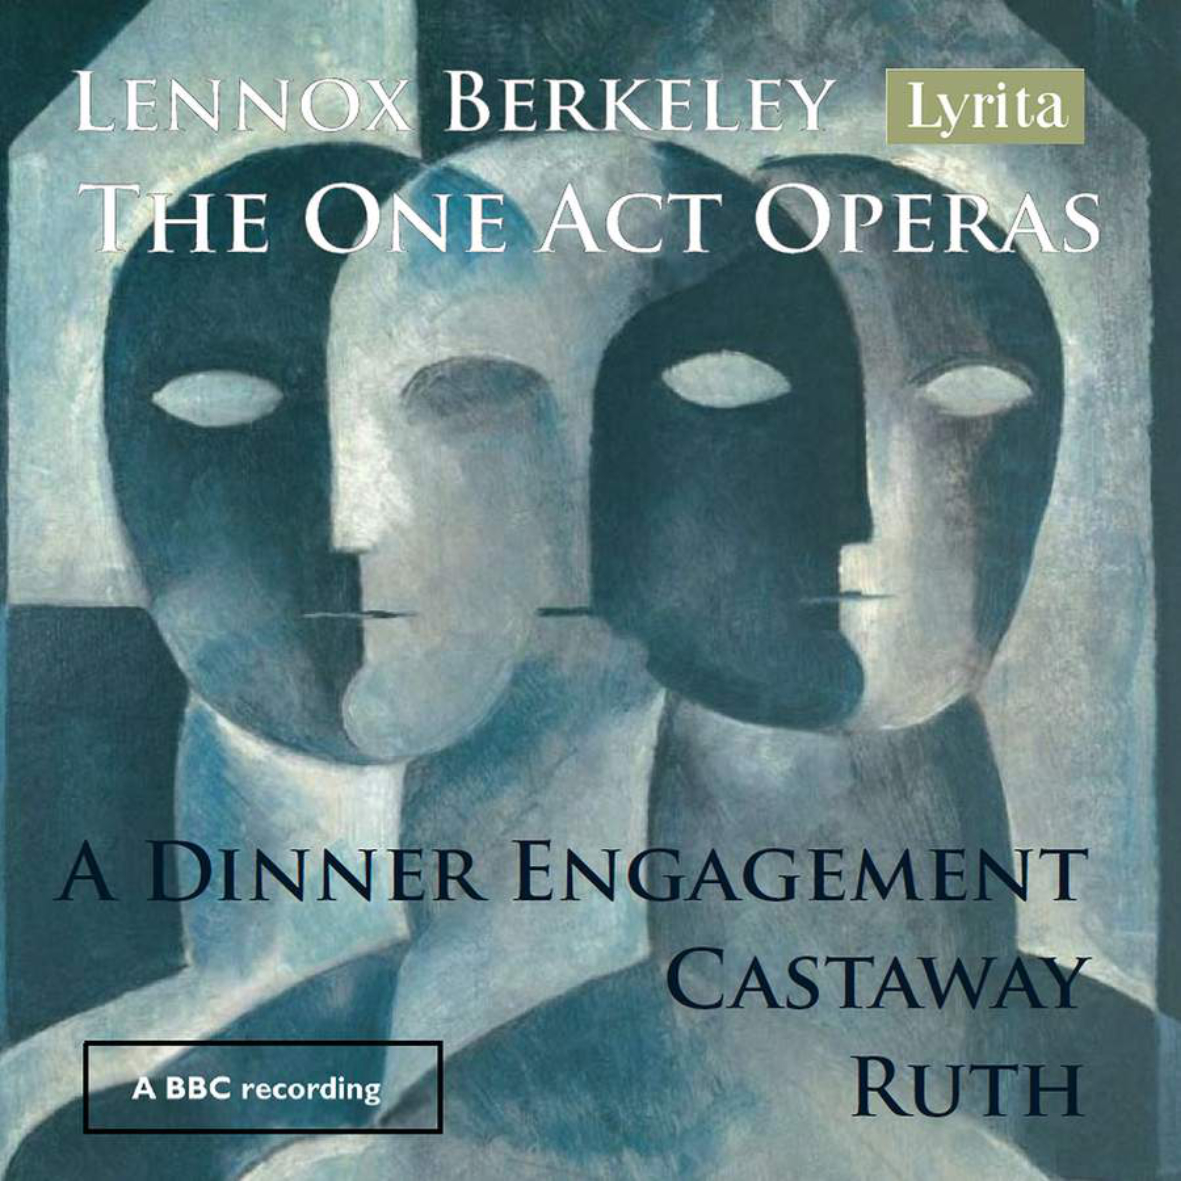 Lyrita’s re-release of BBC recordings of Berkeley’s three one-act operas 